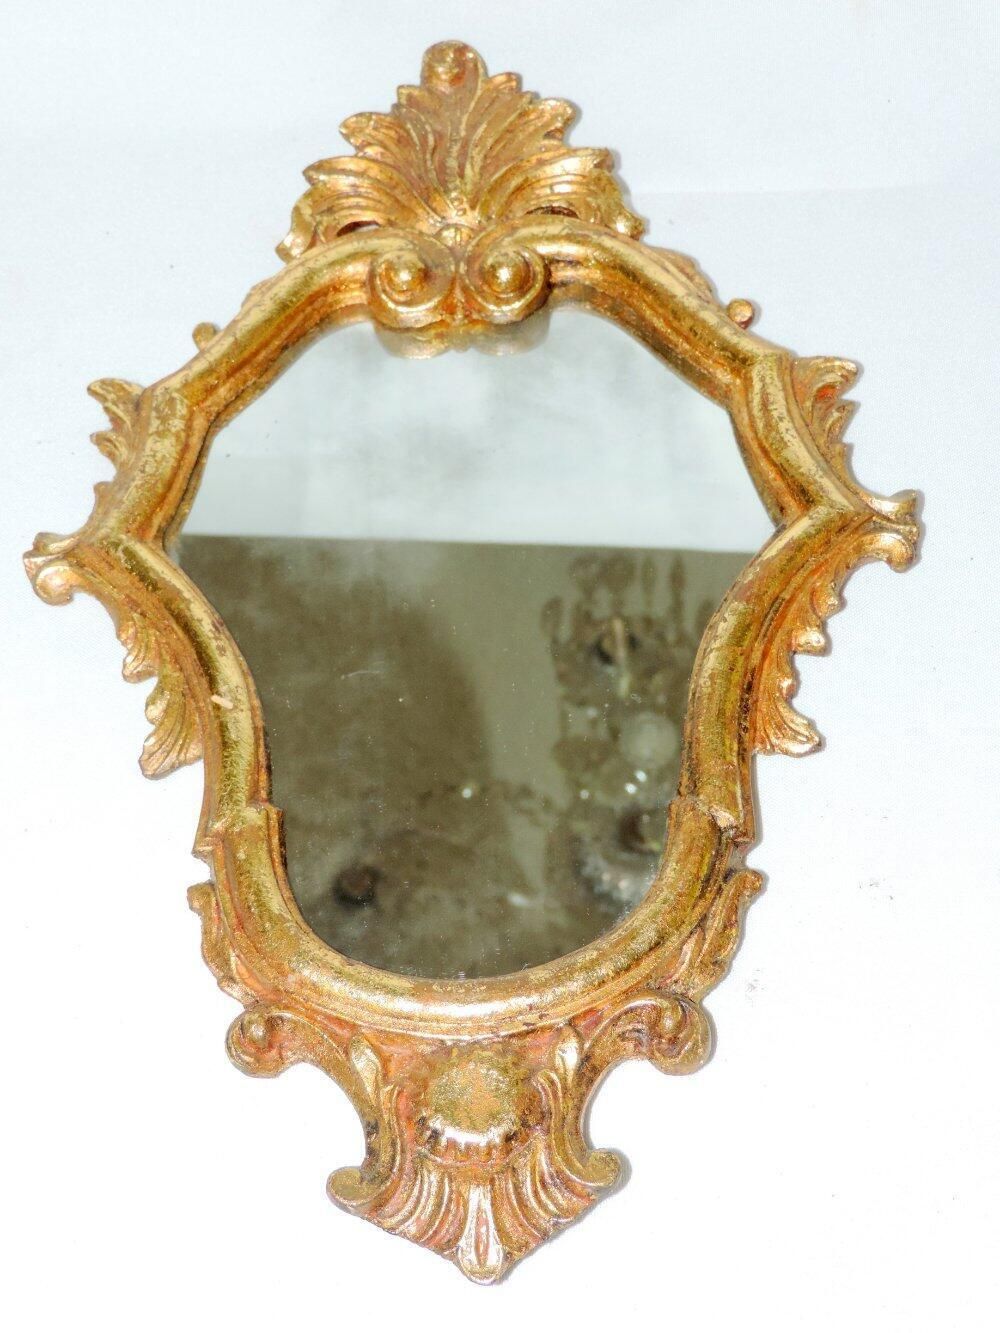 Vintage Florentine Ornate Baroque Style Wood Mirror Antiqued Gold Harods #2 | eBay US